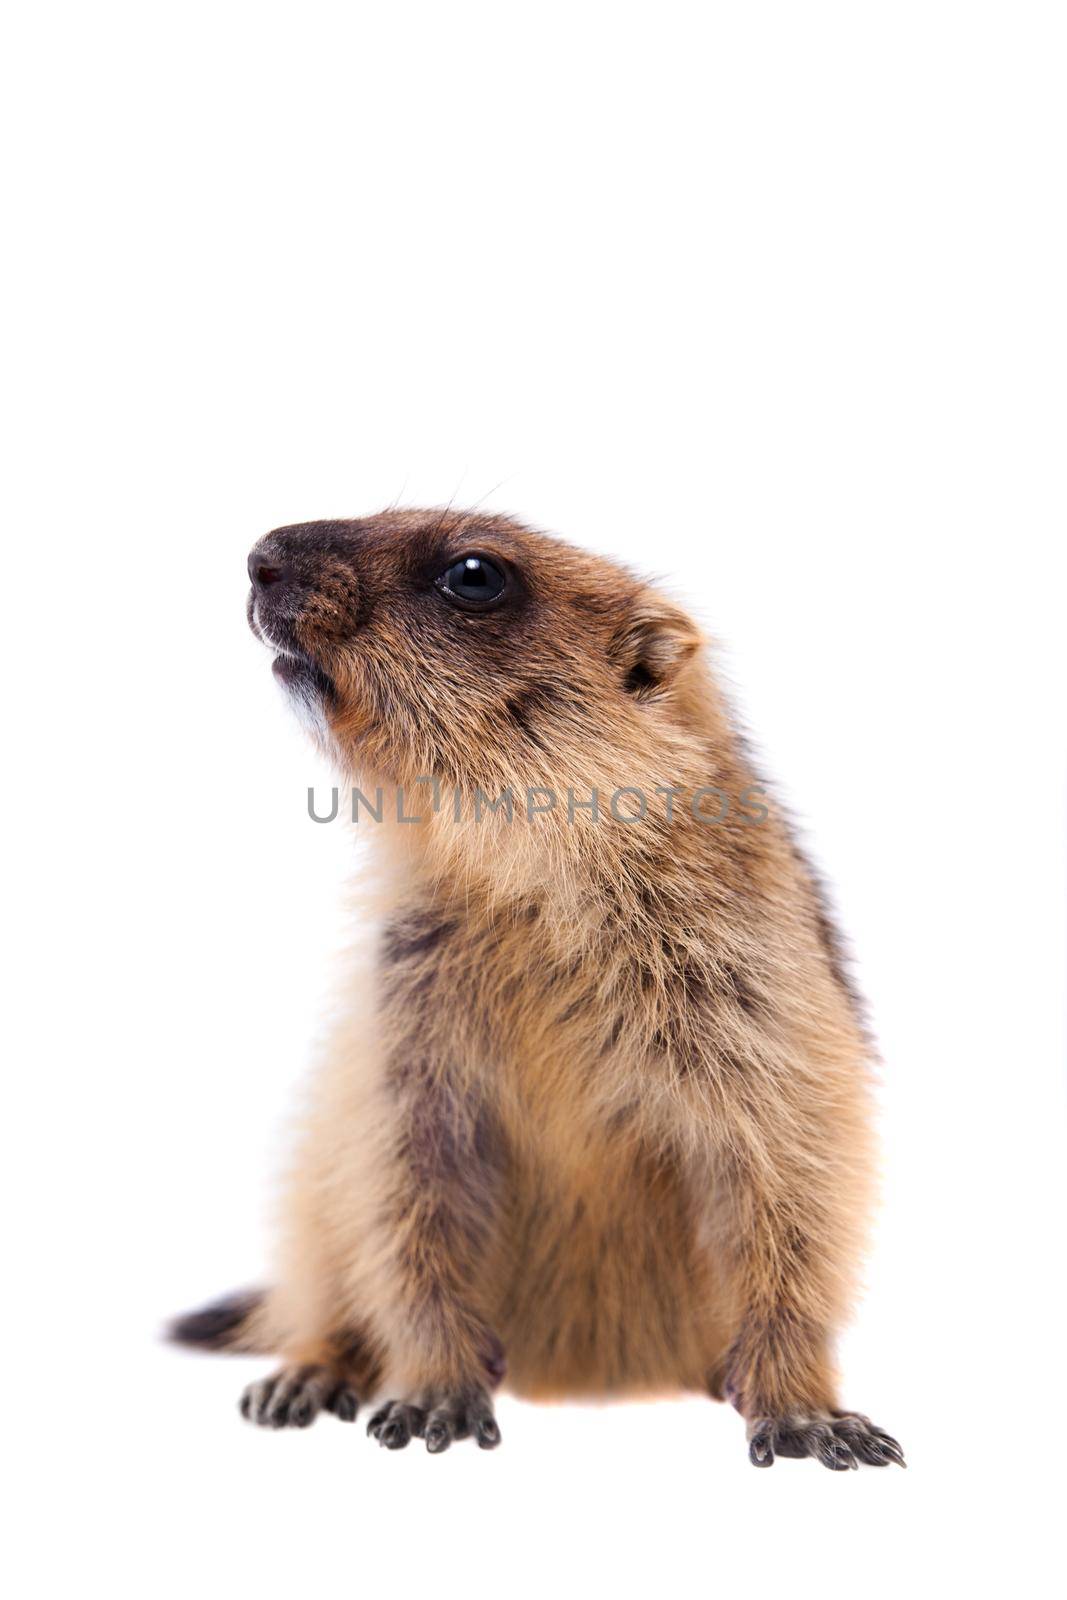 The bobak marmot cub on white by RosaJay